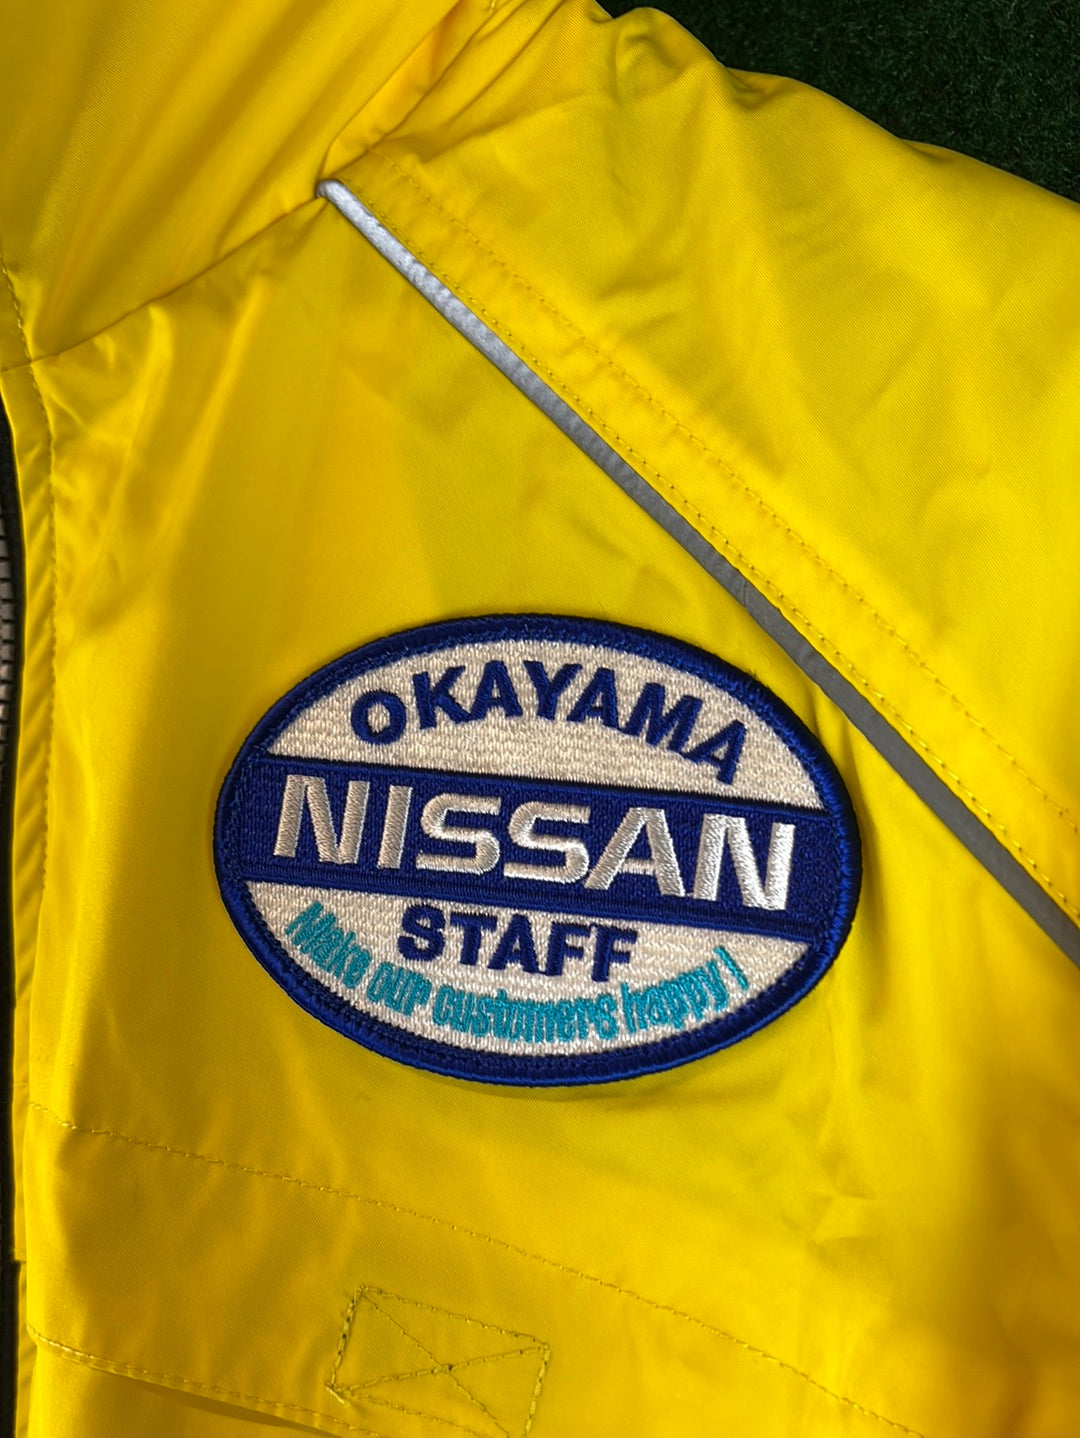 Nissan Okayama Staff - Windbreaker Jacket